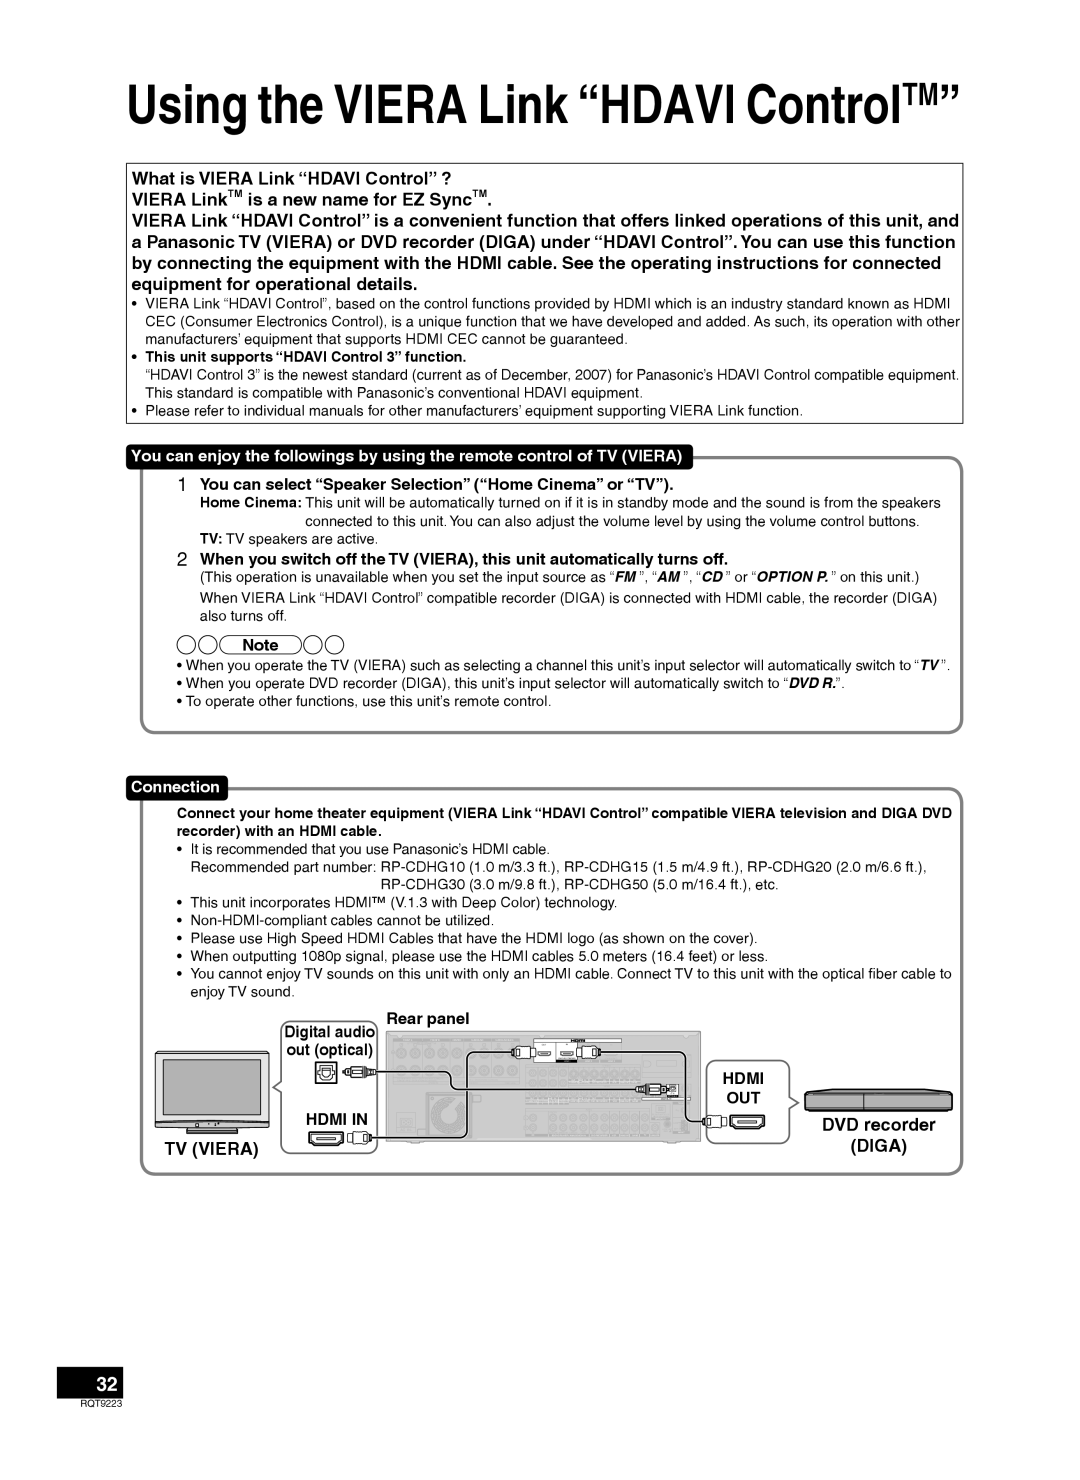 Panasonic RQT9223-Y warranty Using the VIERA Link “HDAVI ControlTM”, Tv Viera, DVD recorder DIGA, Connection, Rear panel 